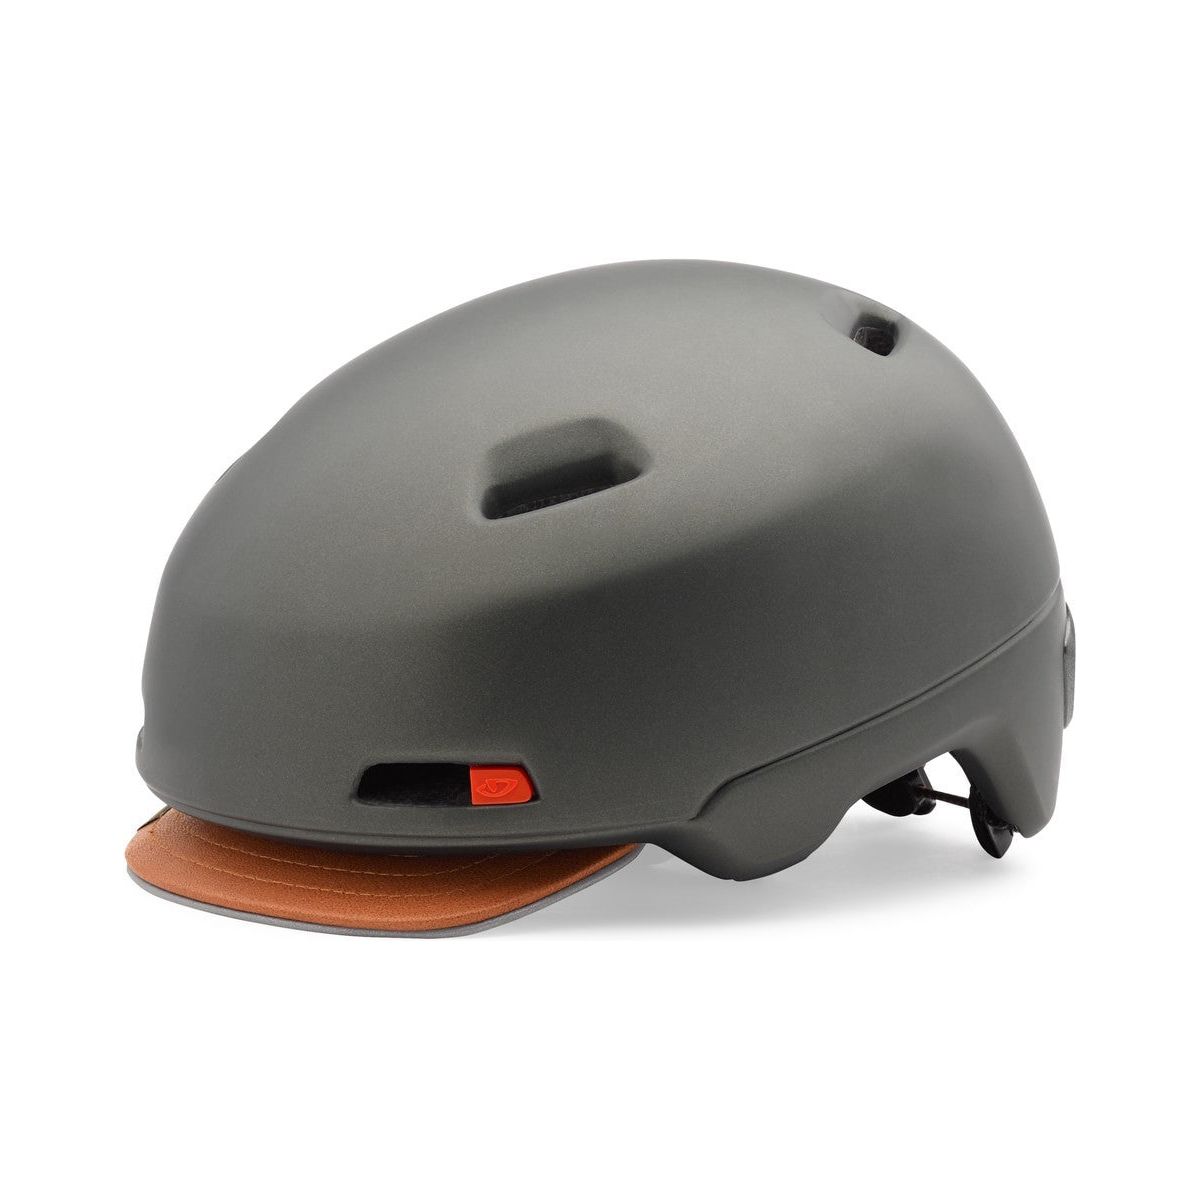 Giro Sutton Helmet